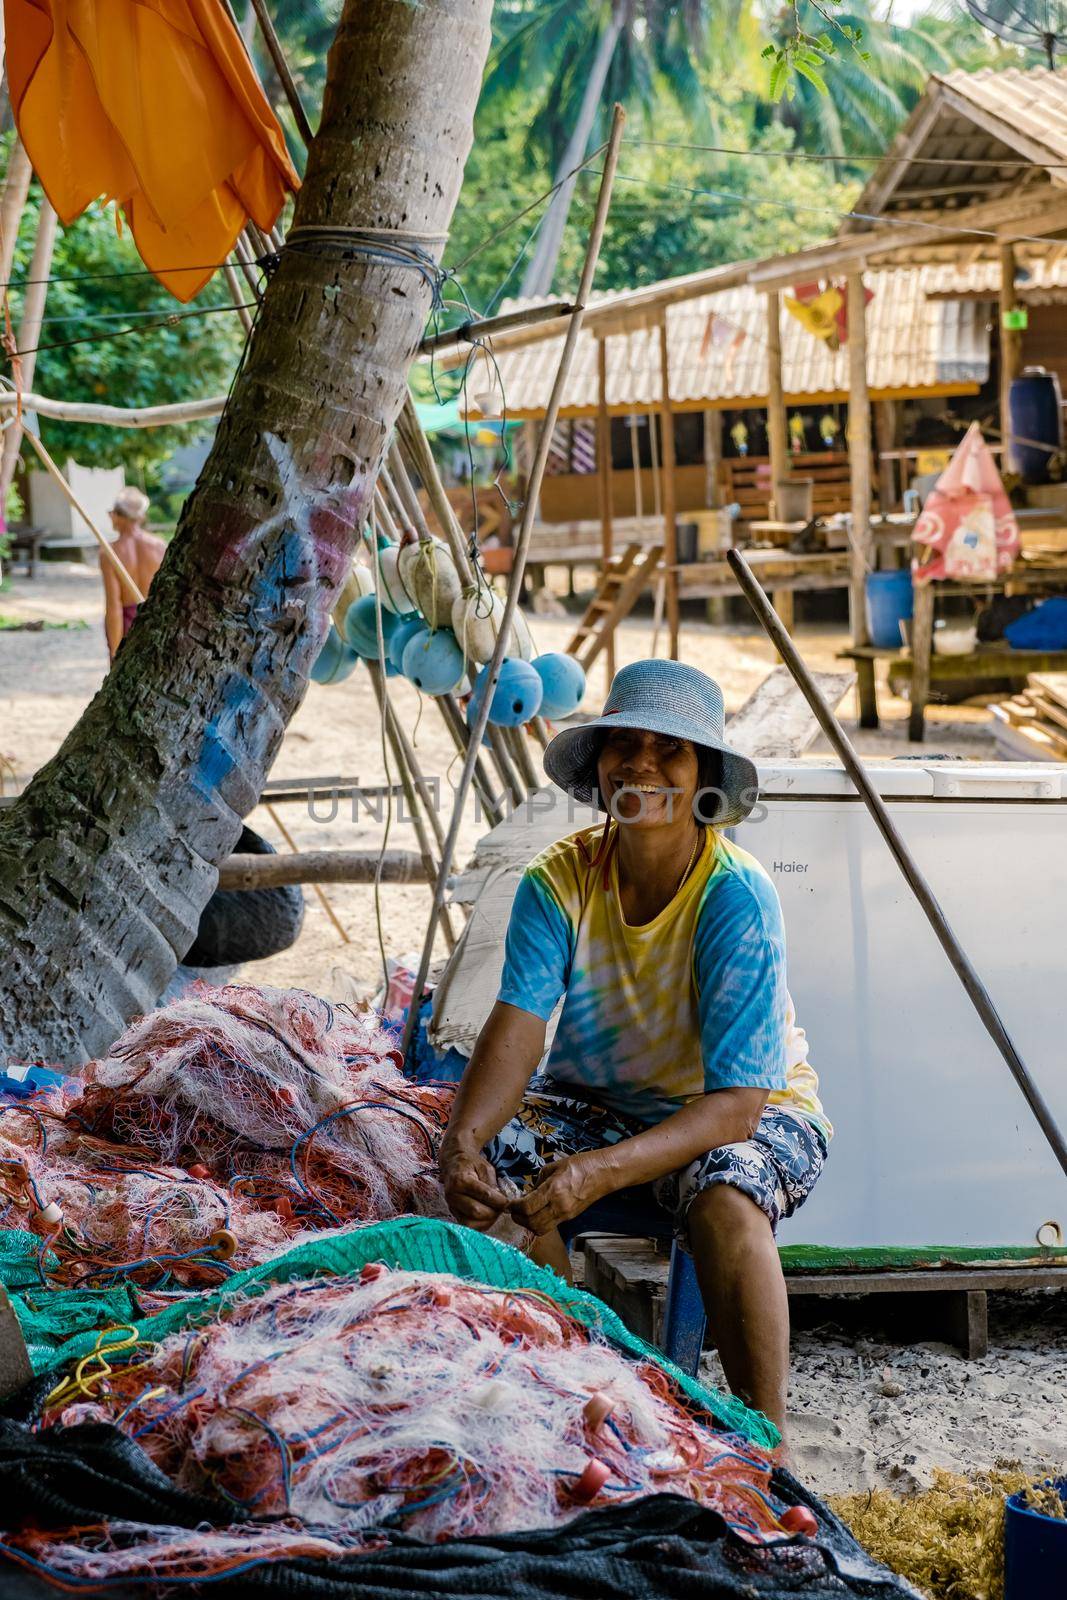 Koh Phitak , Chumphon province Thailand January 2020, fishing boats and small huts above the water, Koh Phitak a tradiional fishing village in Thailand Asia